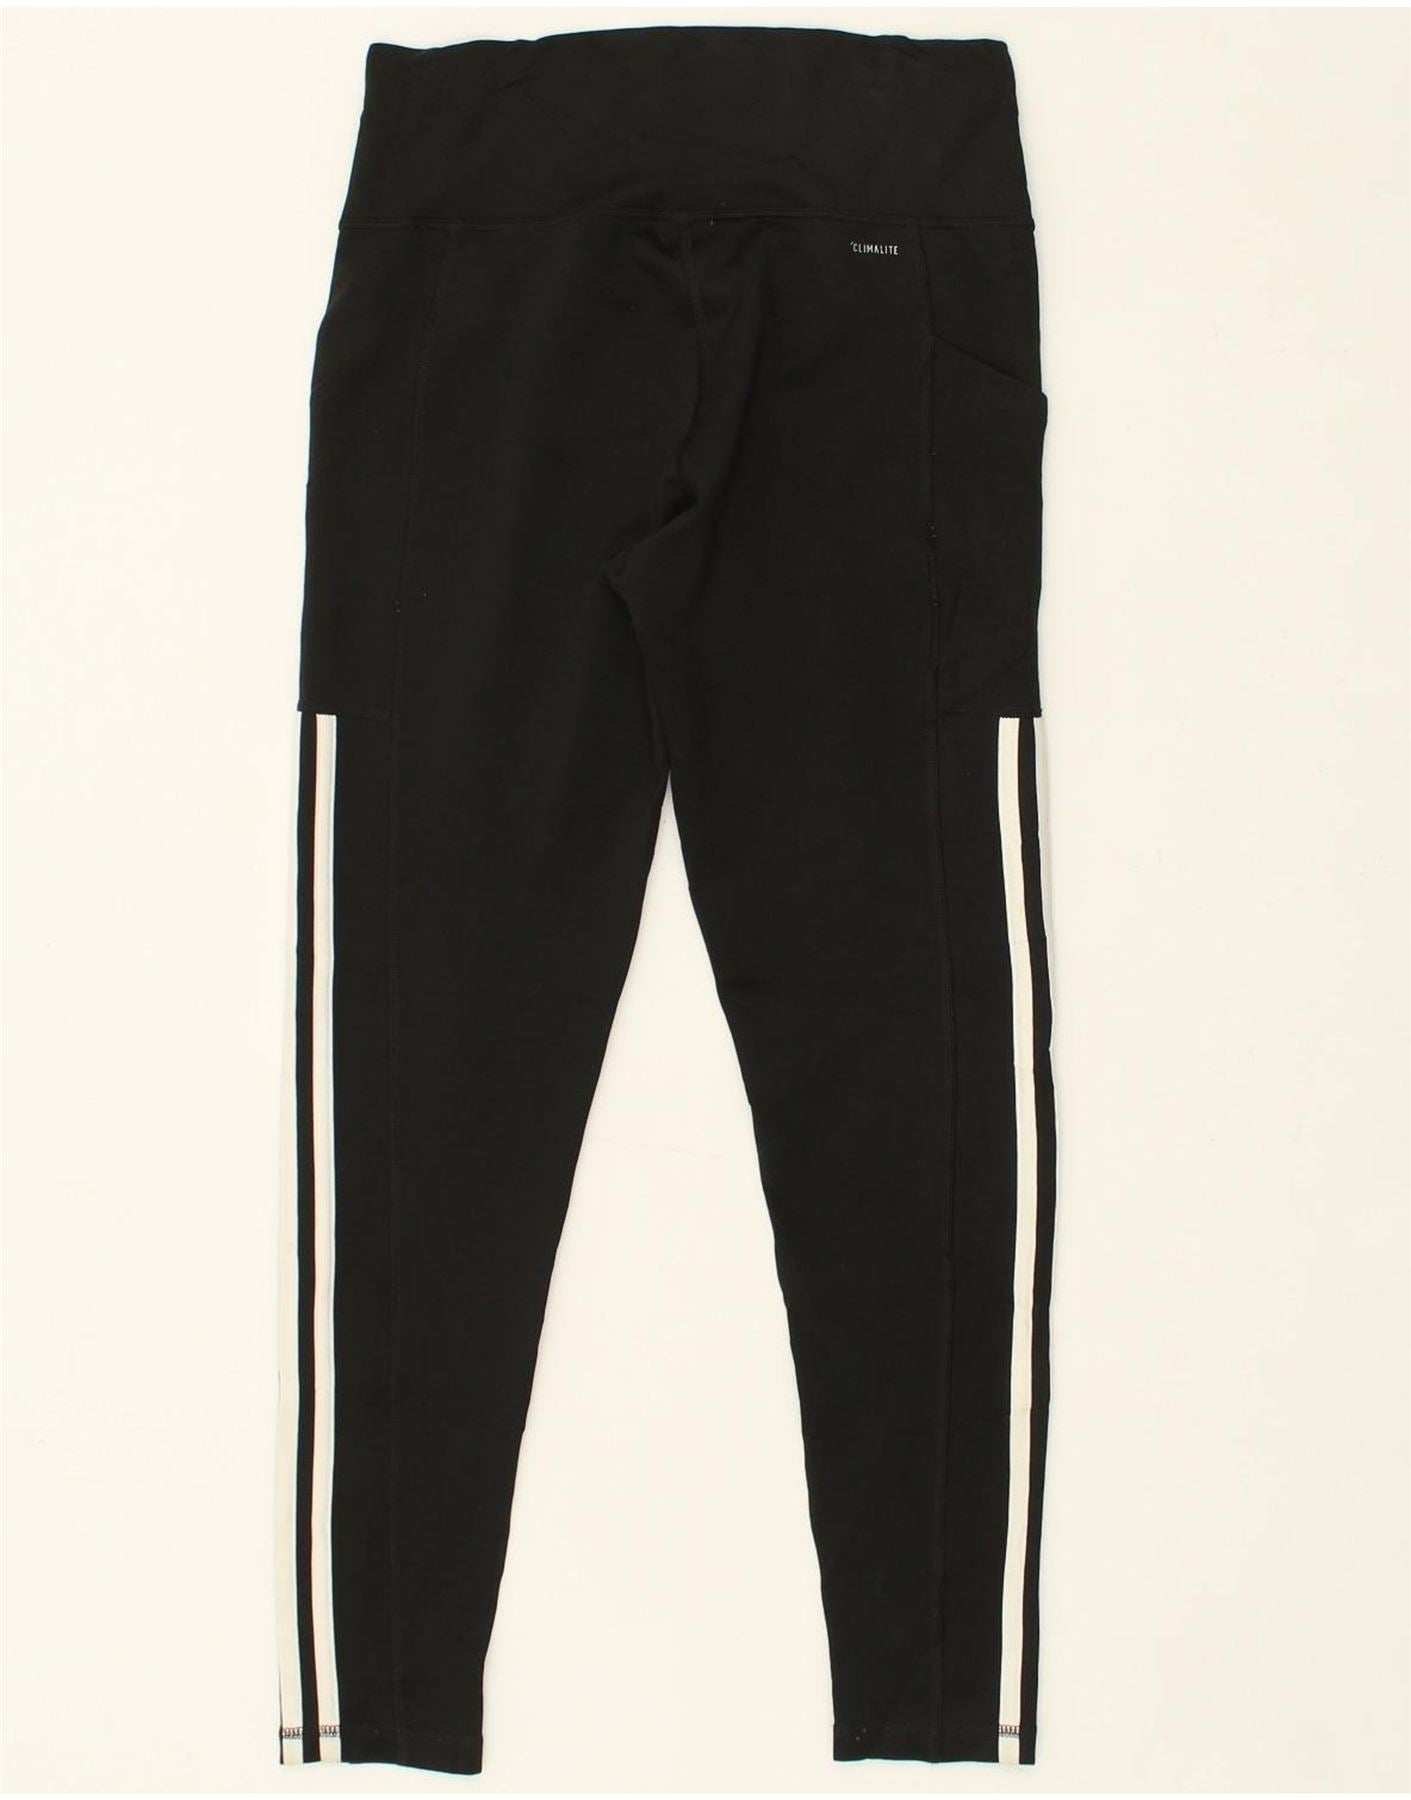 ADIDAS Womens Leggings UK 12-14 Medium Black Polyester, Vintage &  Second-Hand Clothing Online